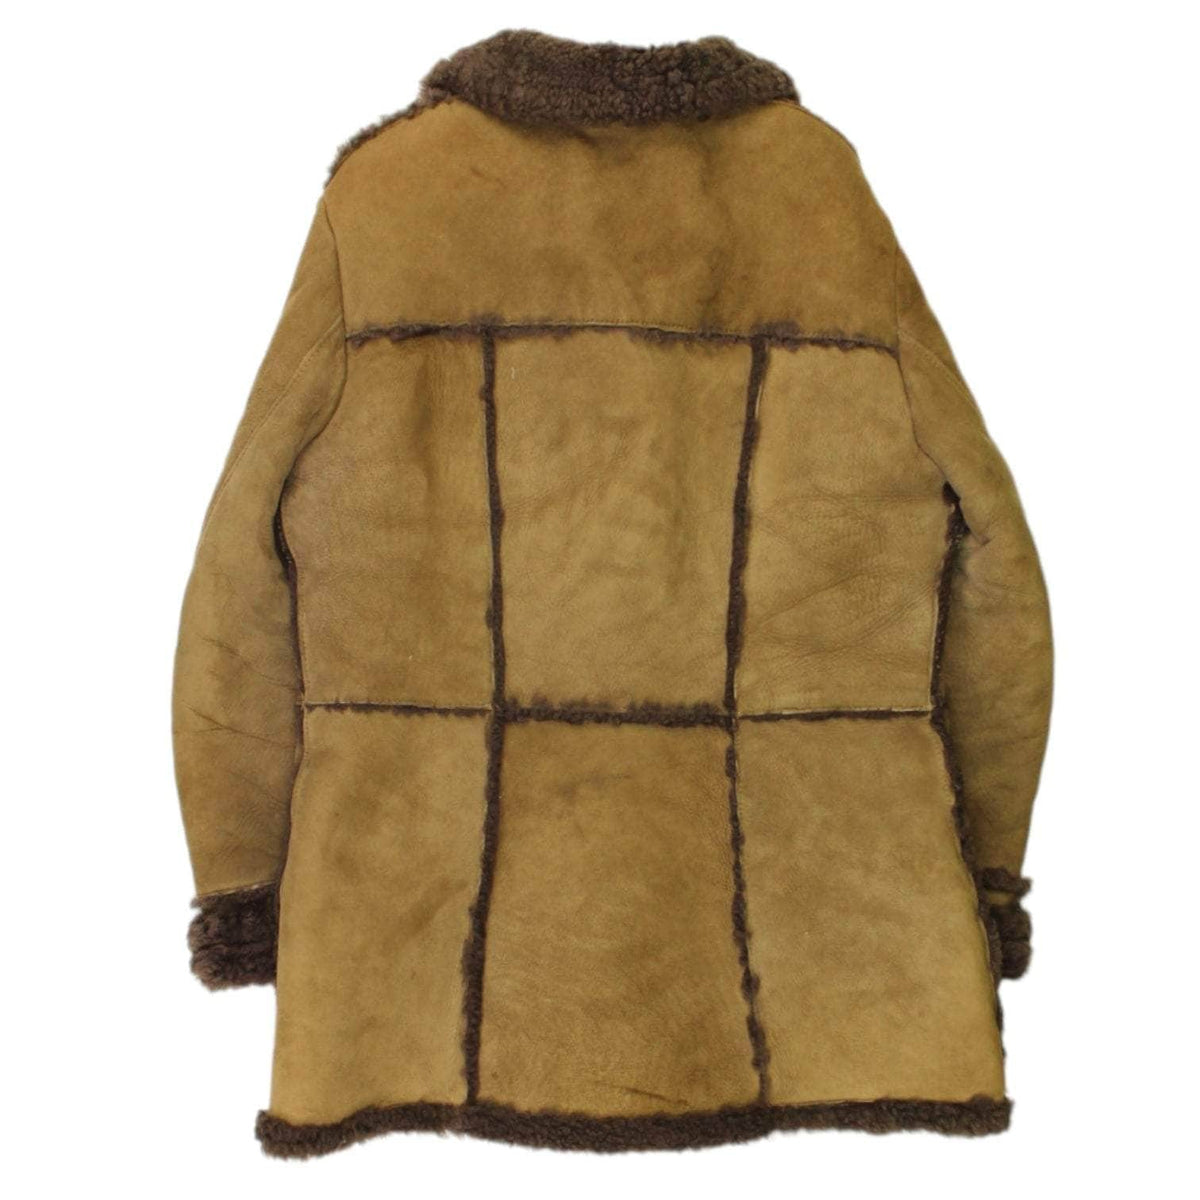 Vintage Brown Sheepskin Jacket